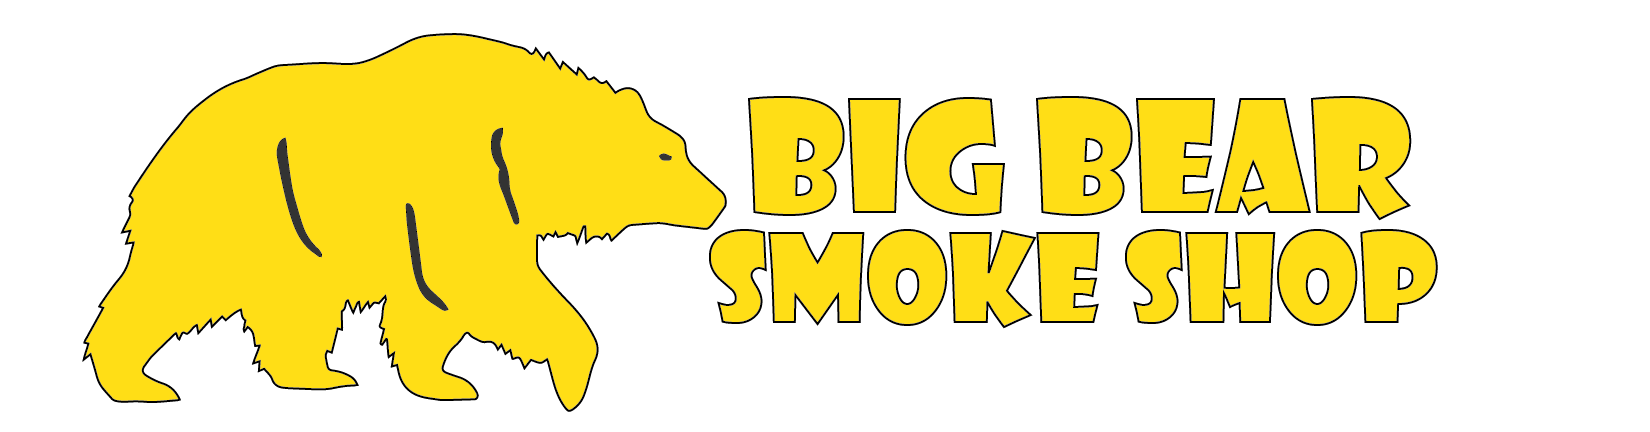 Big Bear Smokeshop